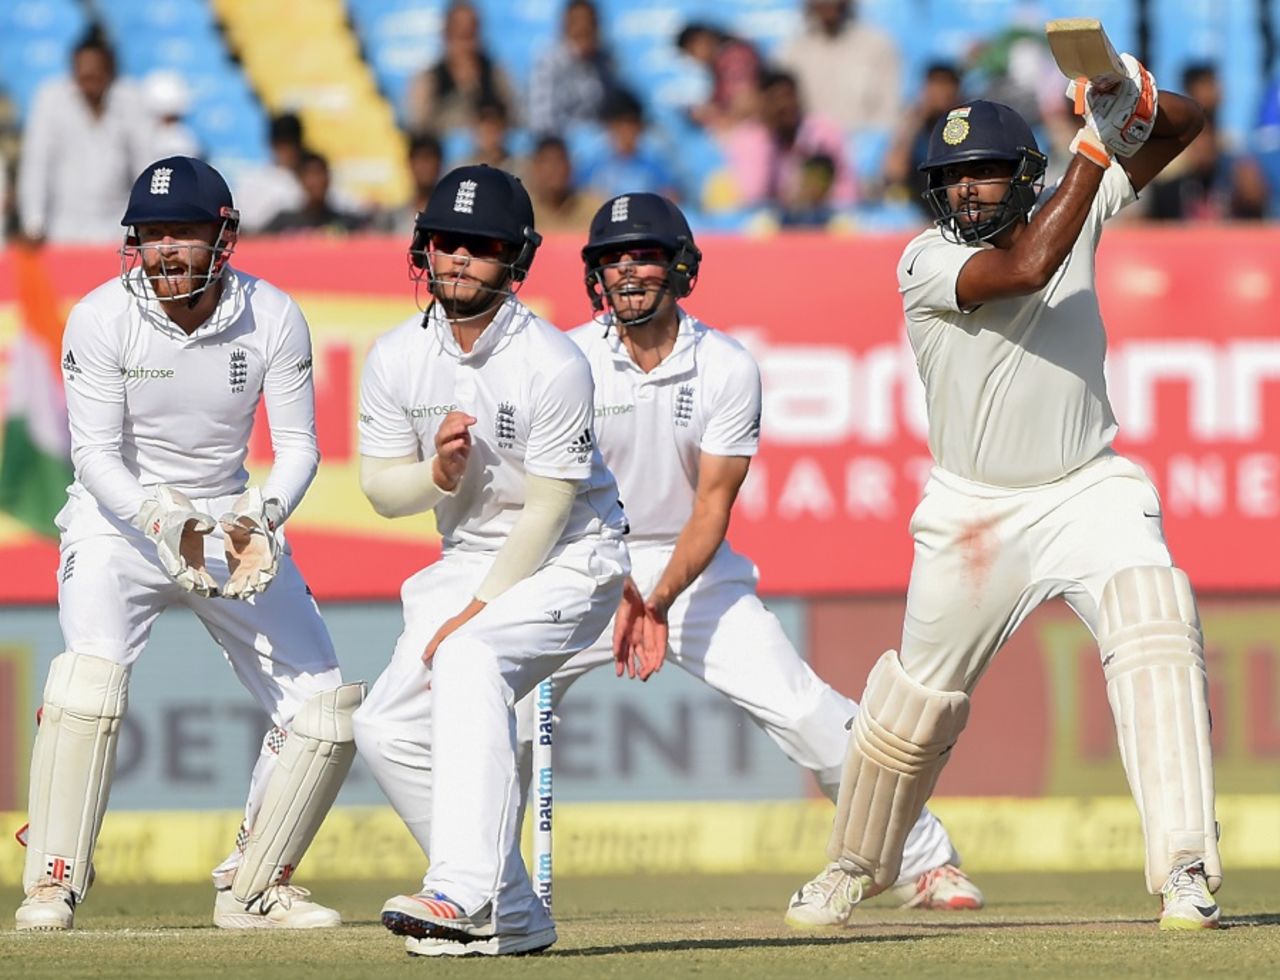 R Ashwin hung in for 53 balls, scoring 32, India v England, 1st Test, Rajkot, 5th day, November 13, 2016